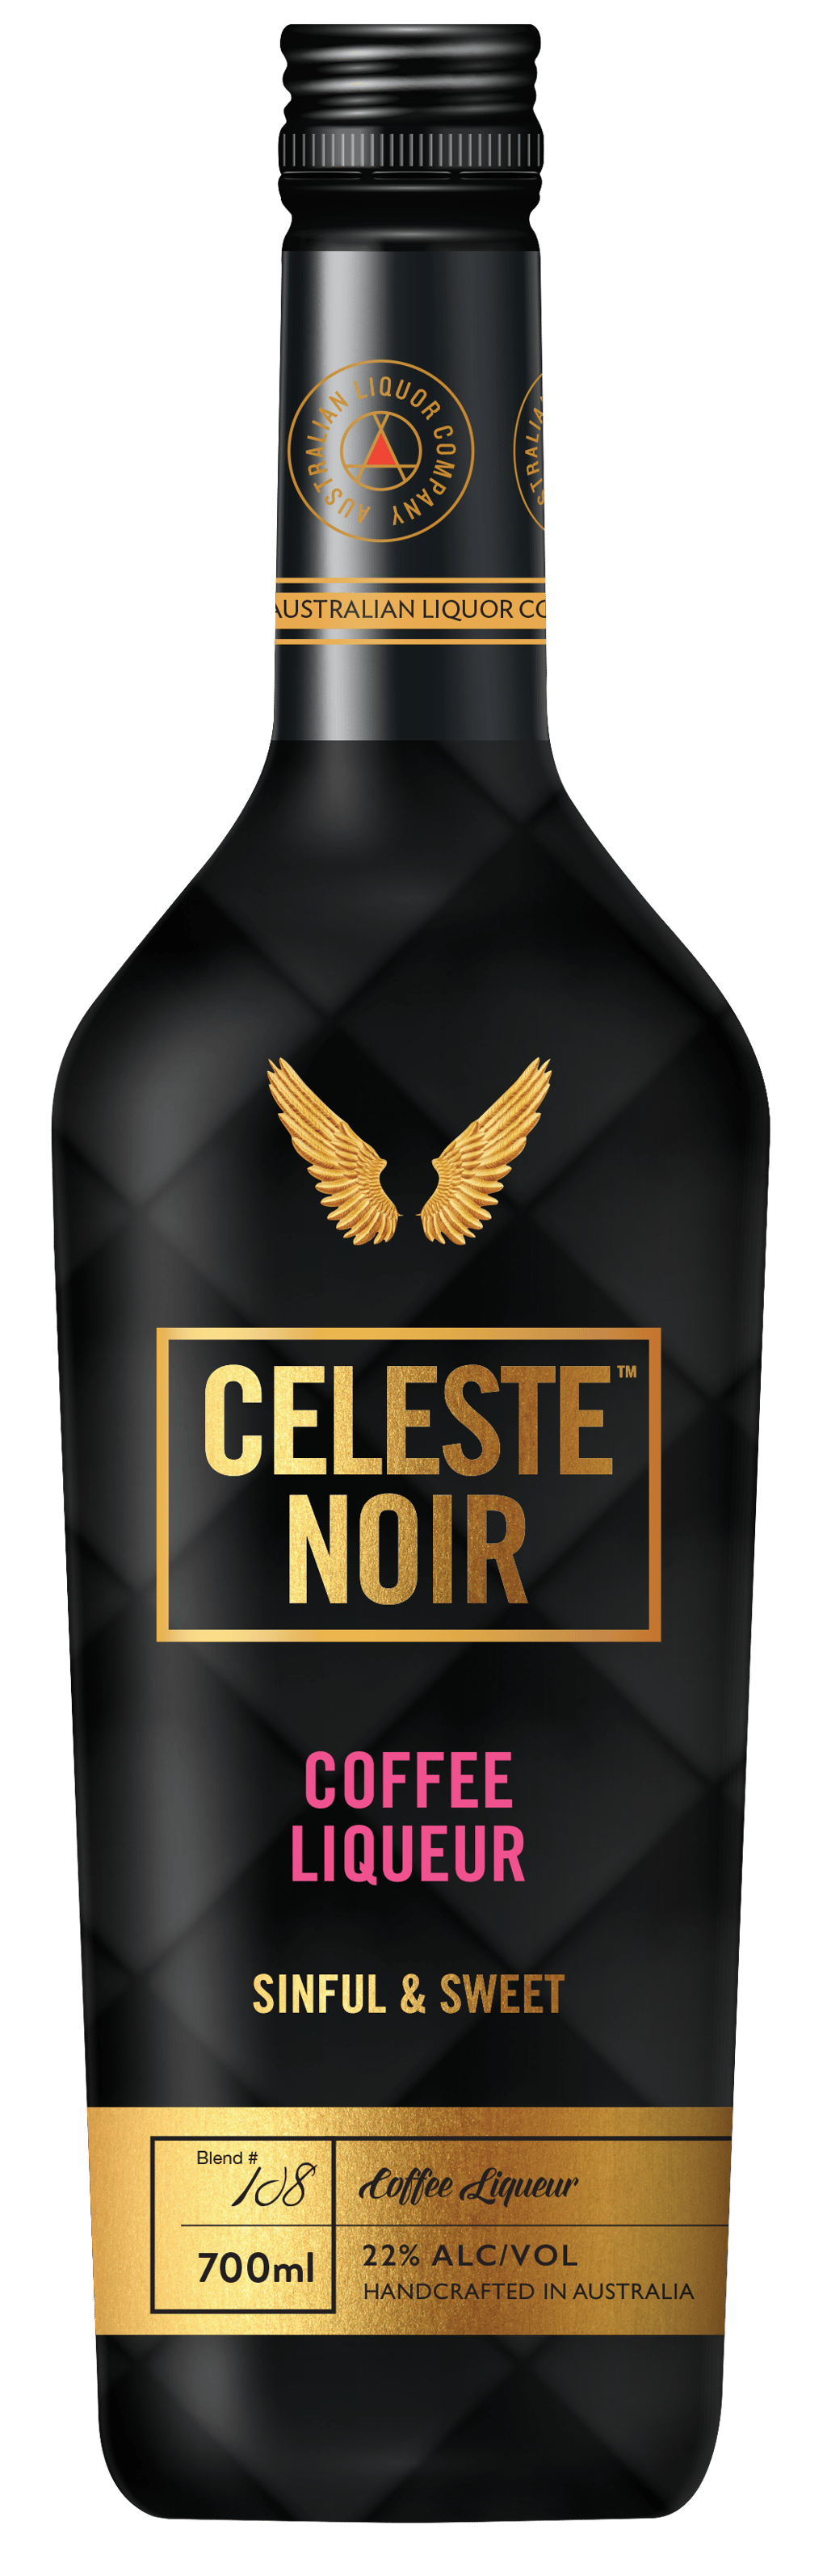 Celeste Noir Coffee Liqueur